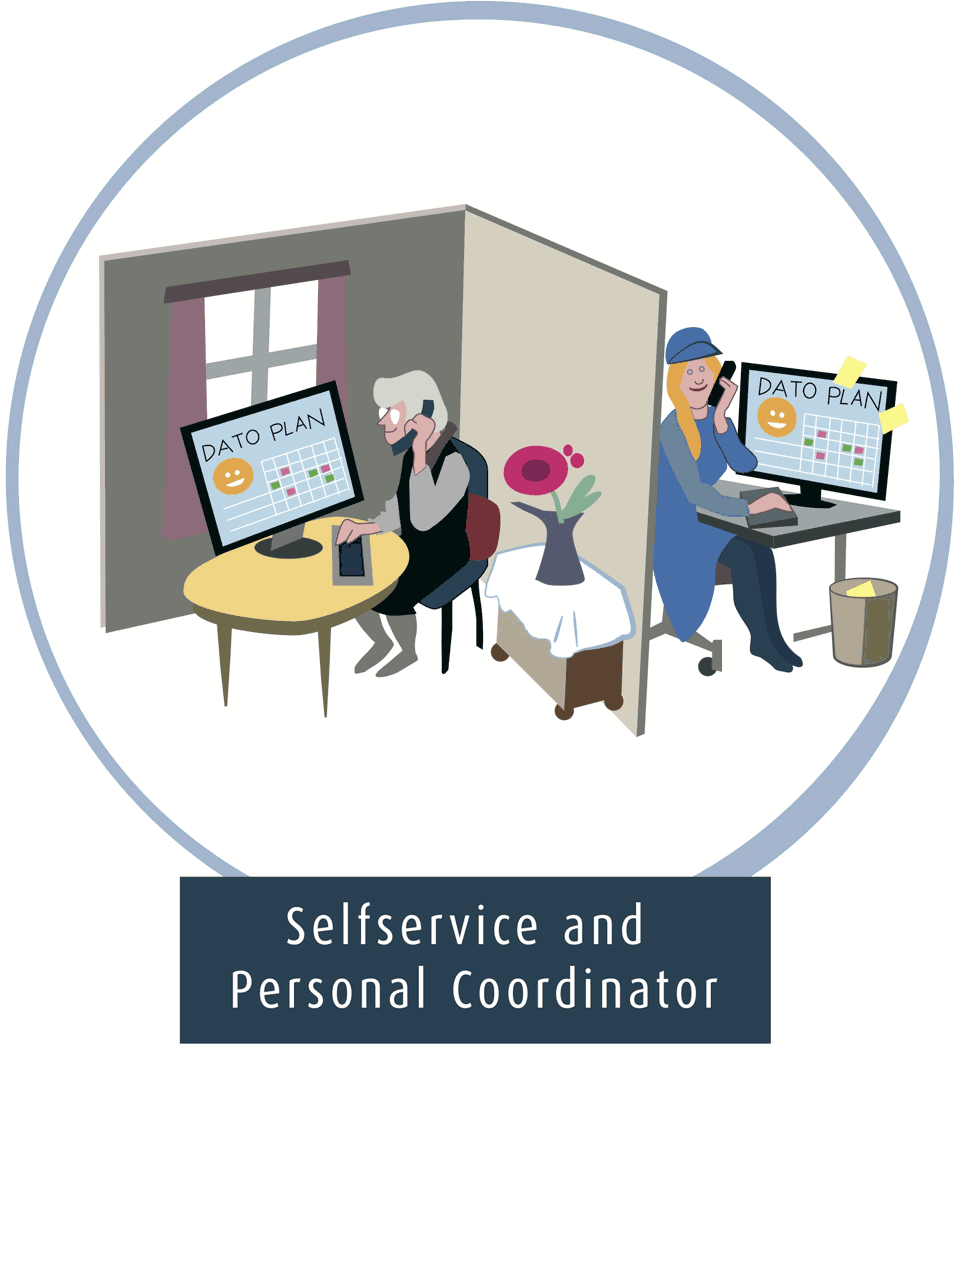 Selfservice, personal coordinator